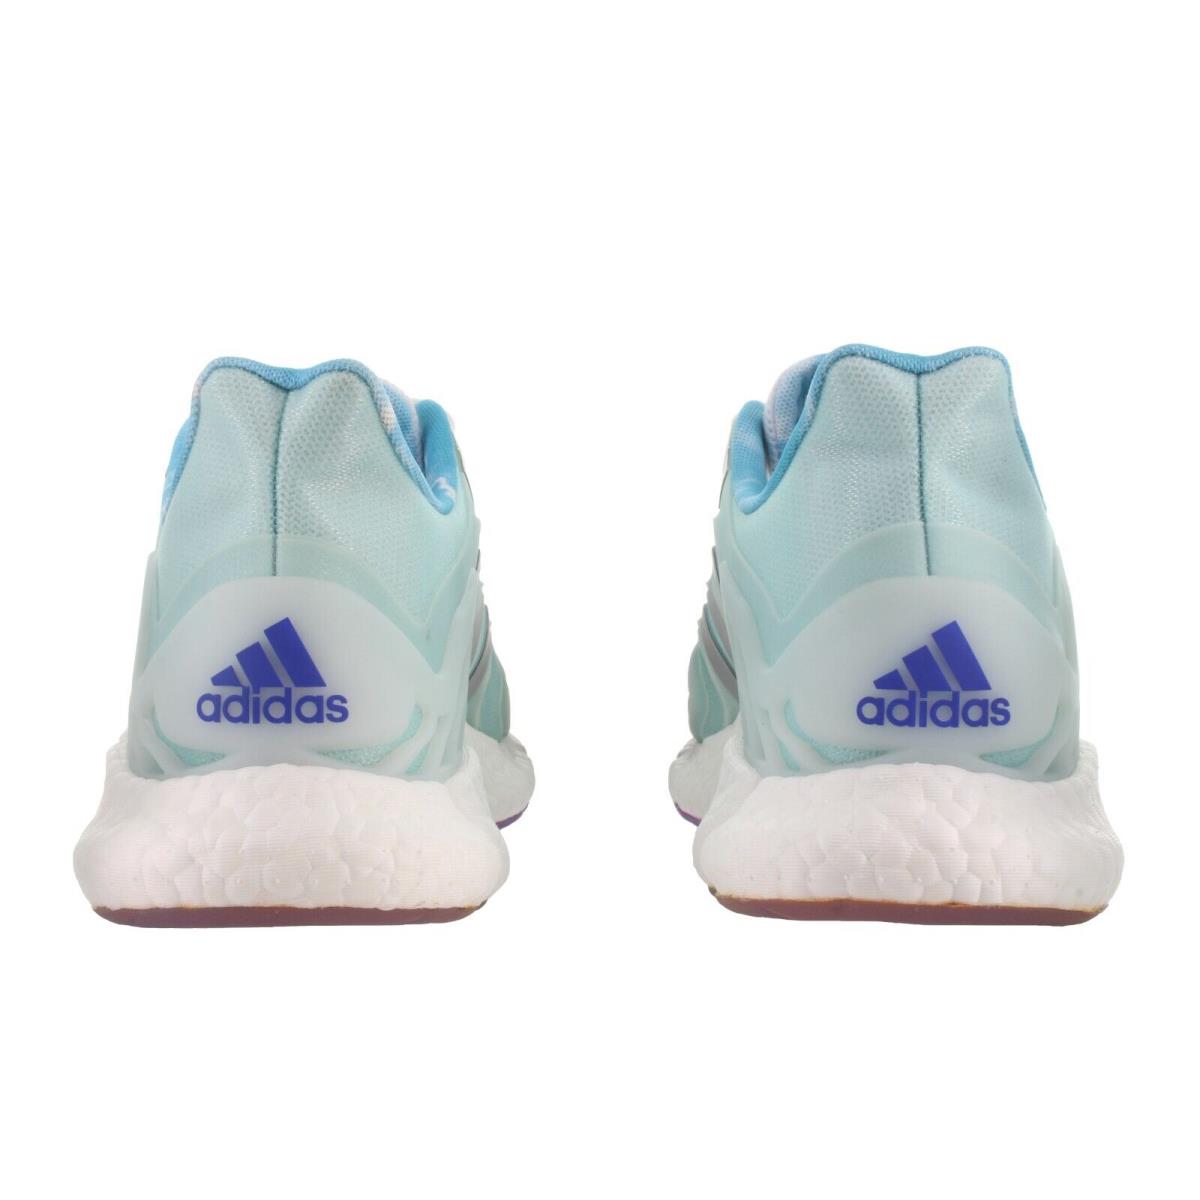 Adidas shoes Climacool Vento - Cloud White, Pulse Aqua, Silver Metallic 3